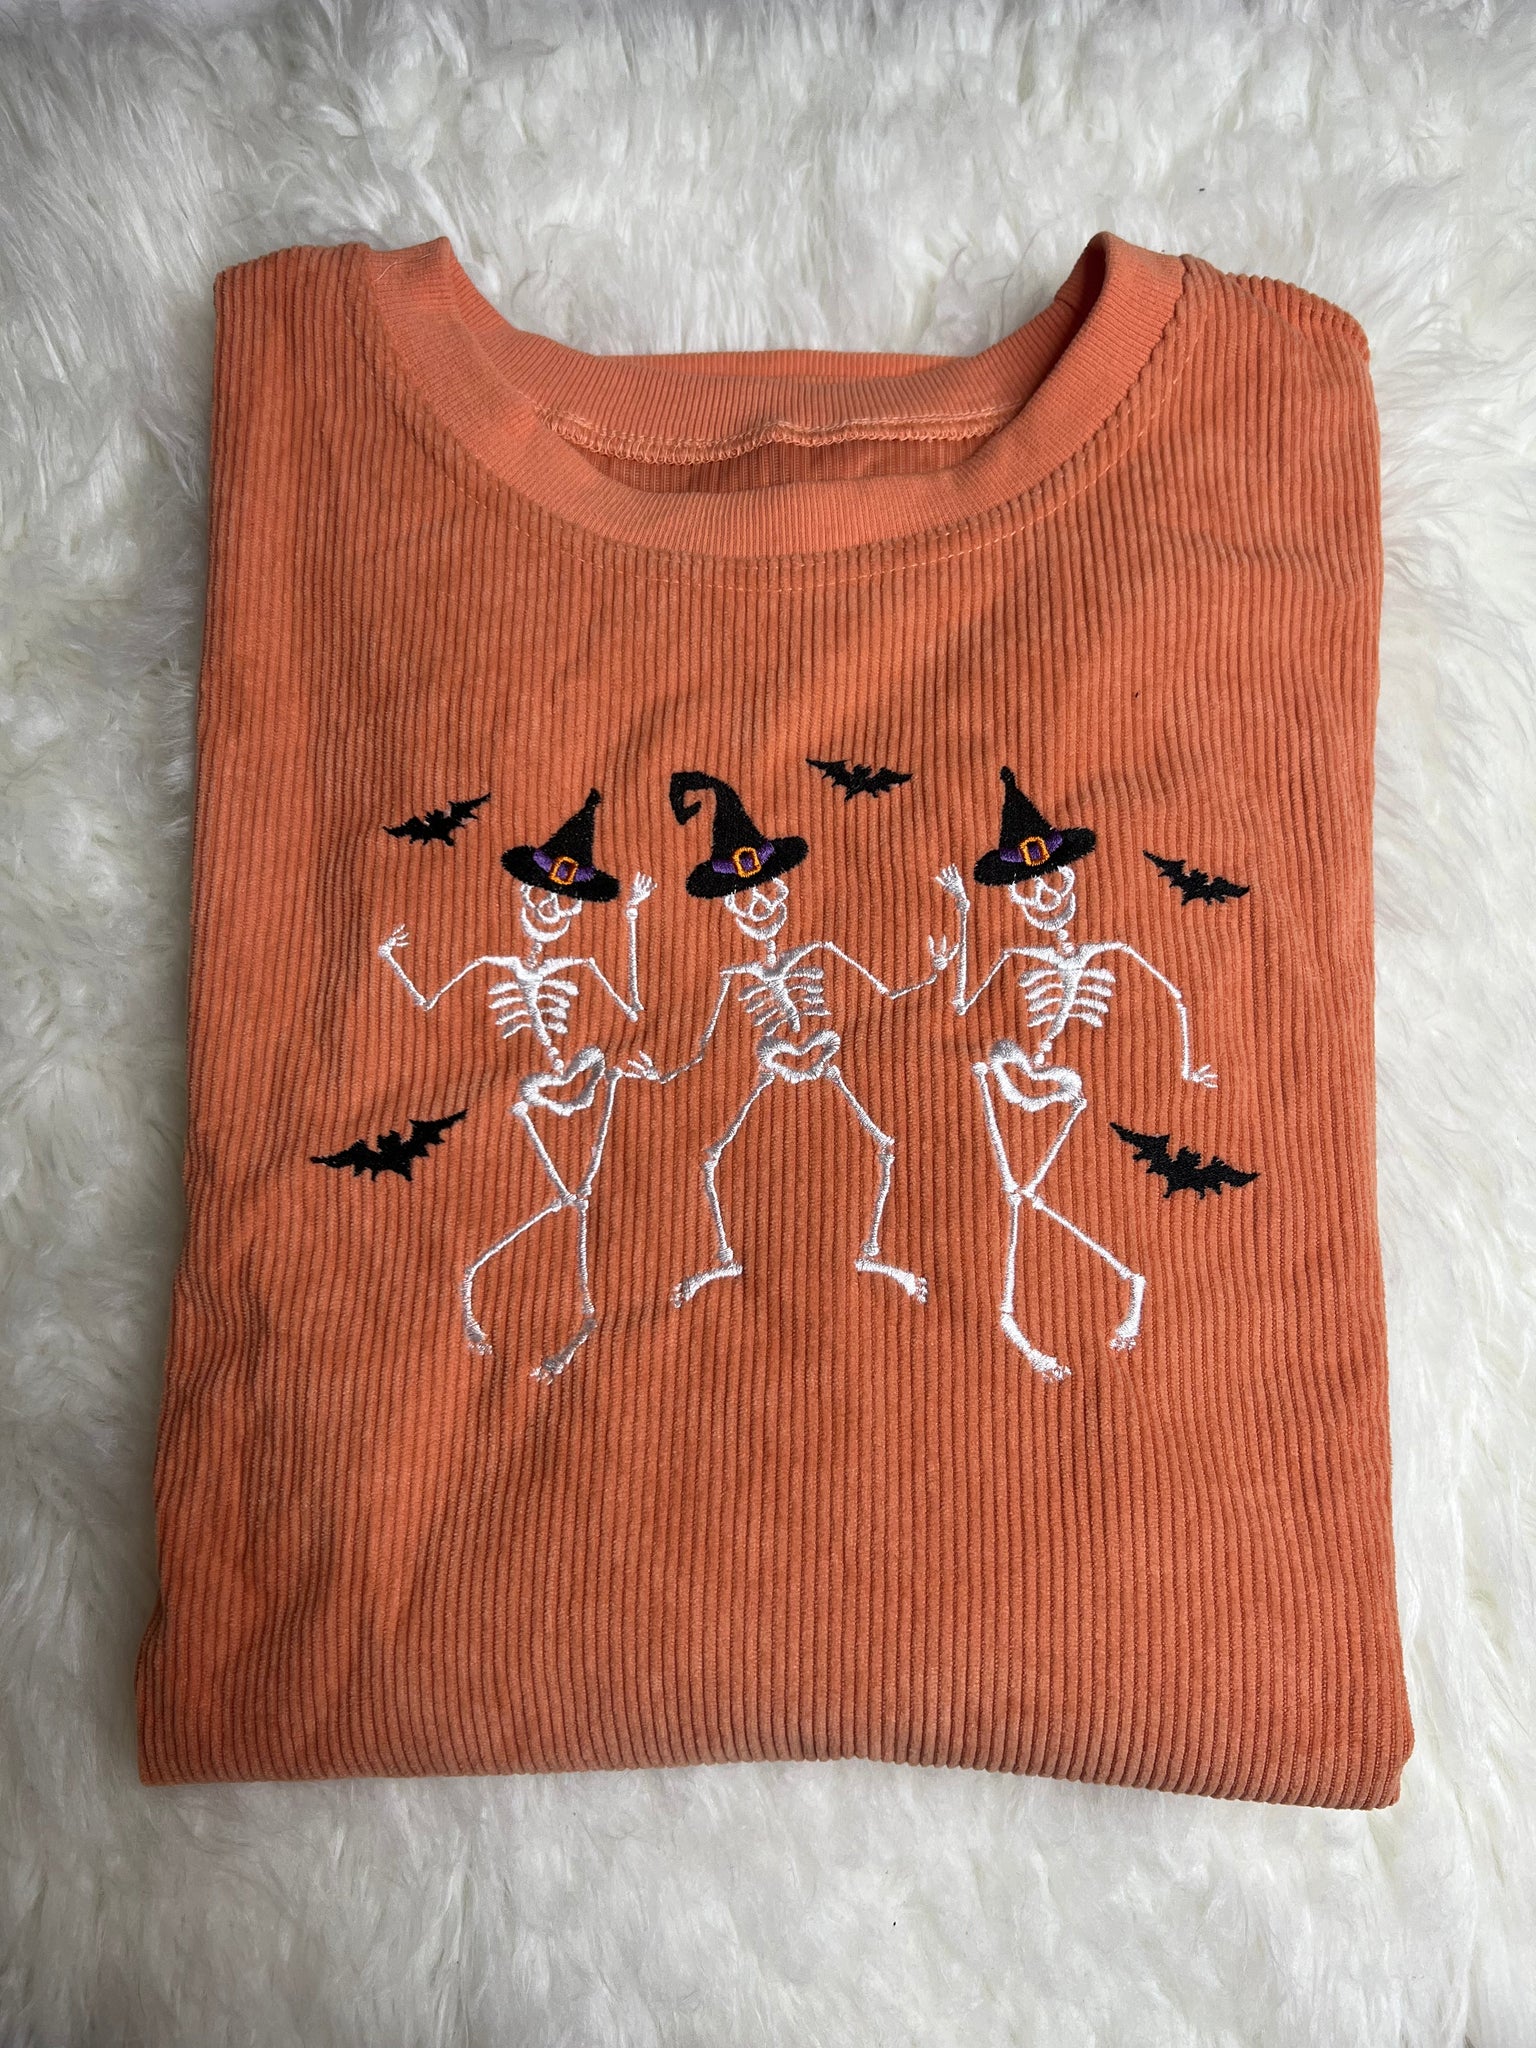 Skeleton Witches - Embroidered Corded Sweatshirt Orange - XL Oversized